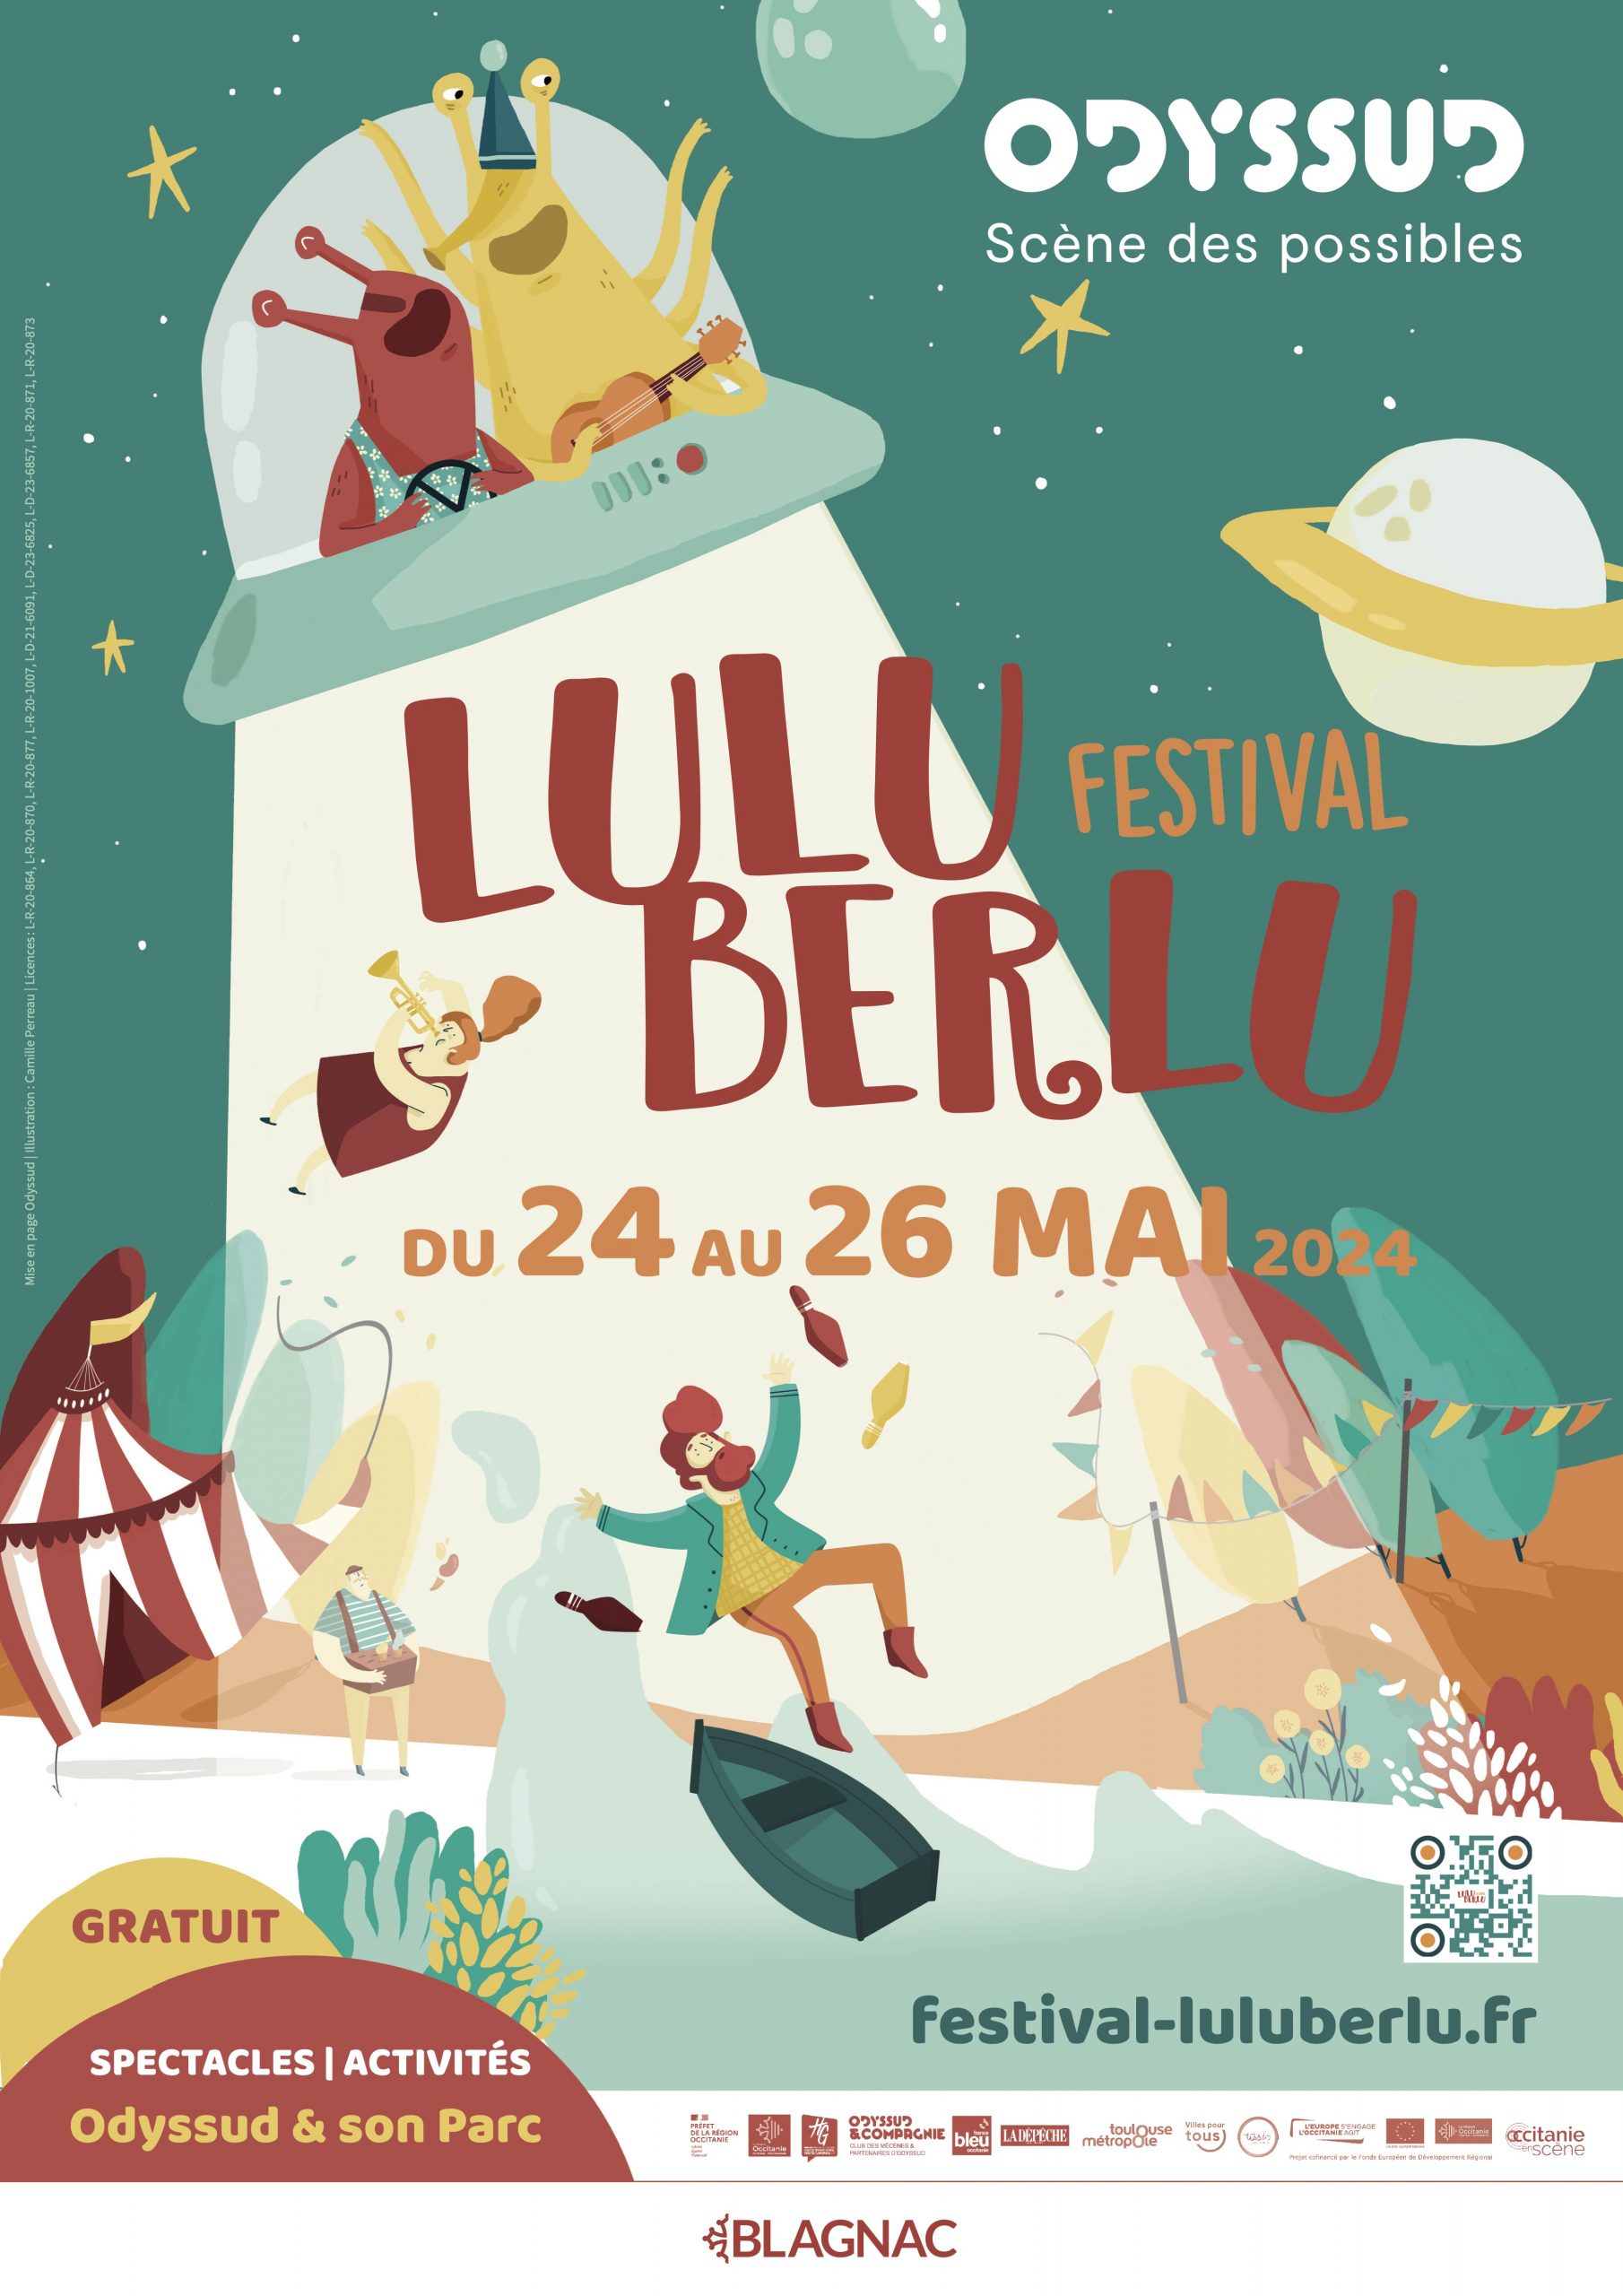 Odyssud Festival Luluberlu